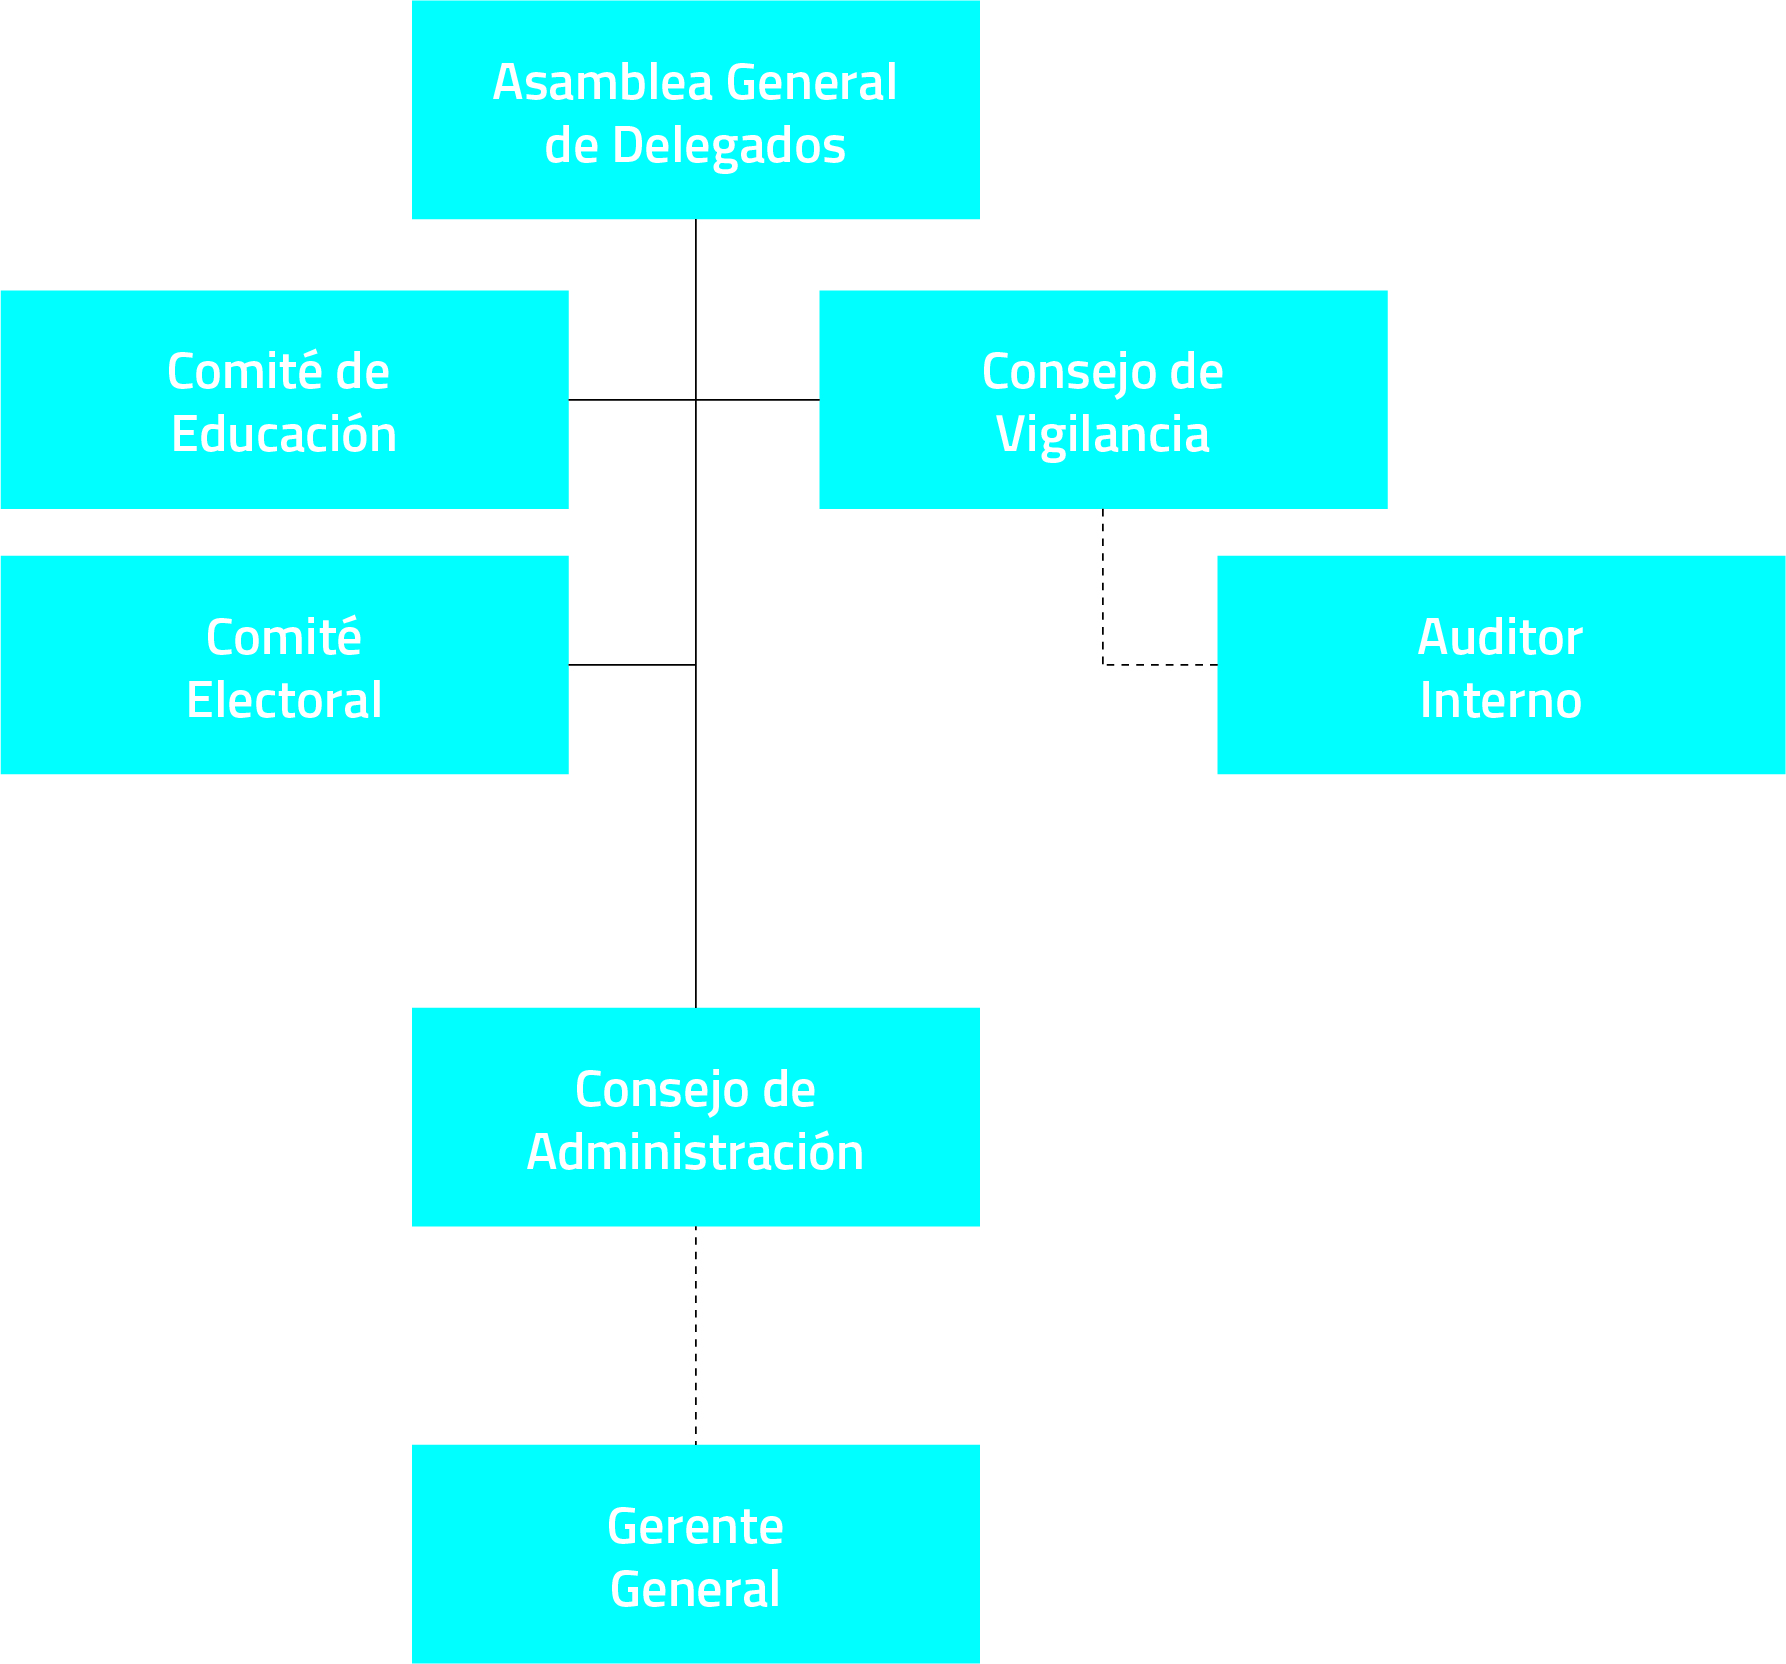 Organic Structure of the Representative Level